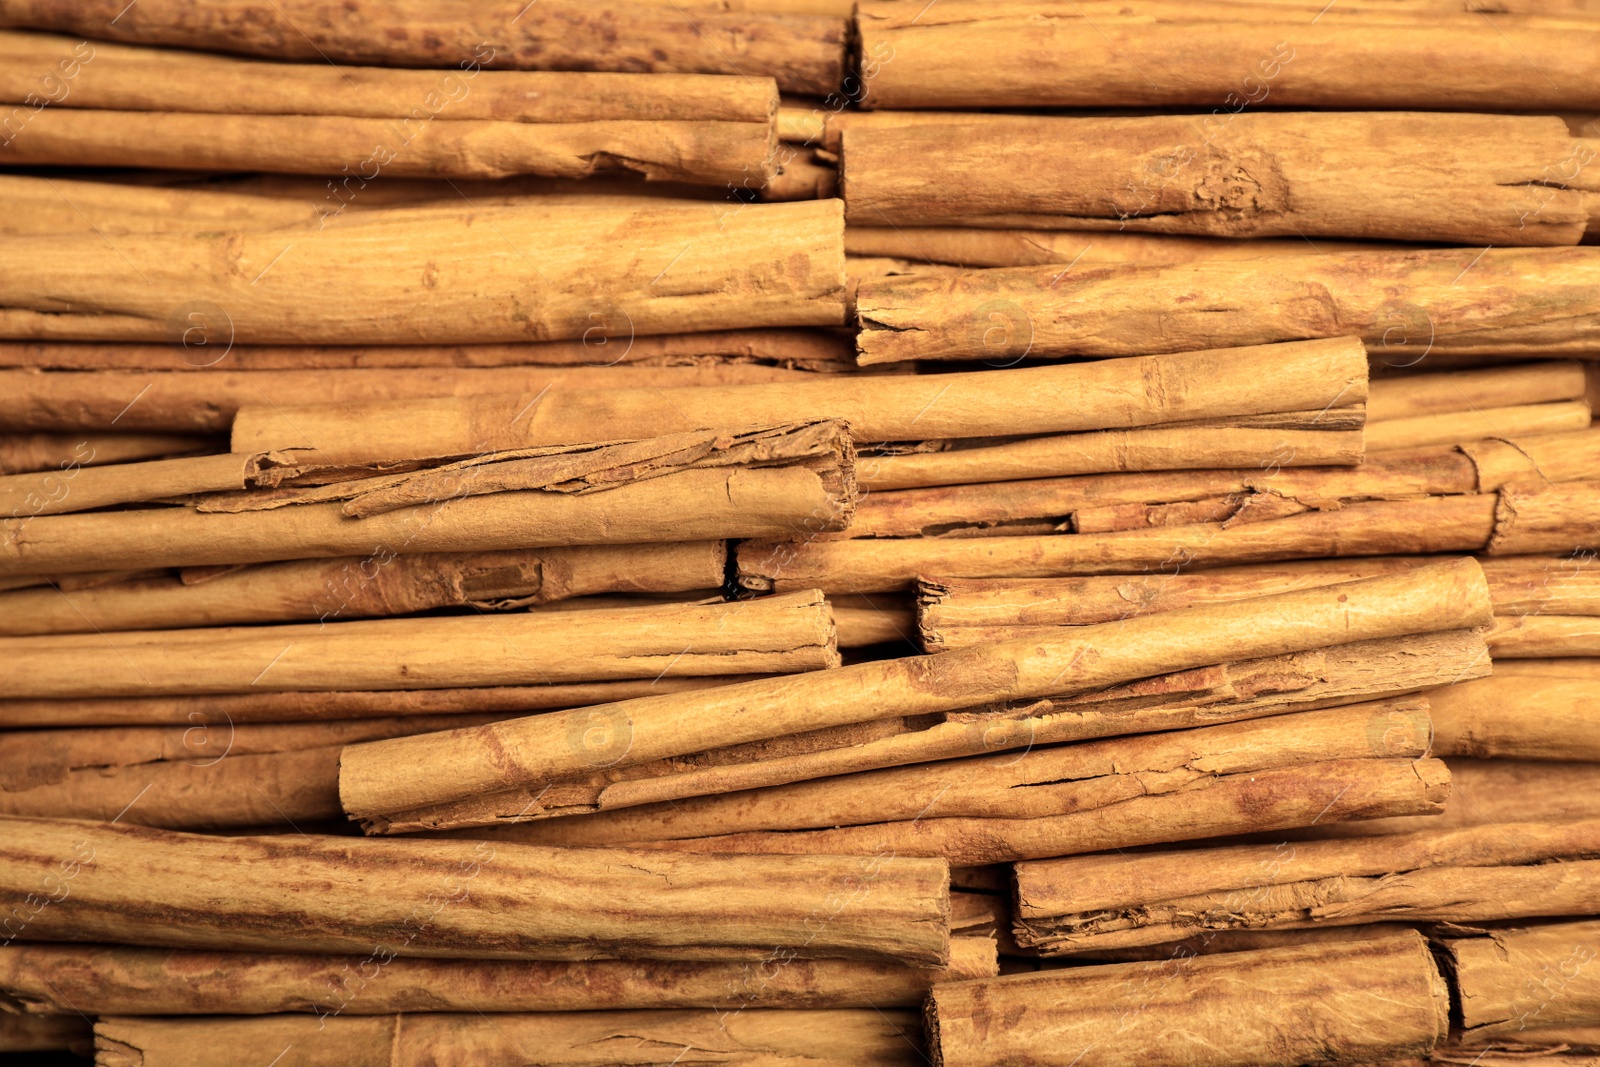 Photo of Aromatic dry cinnamon sticks as background, closeup